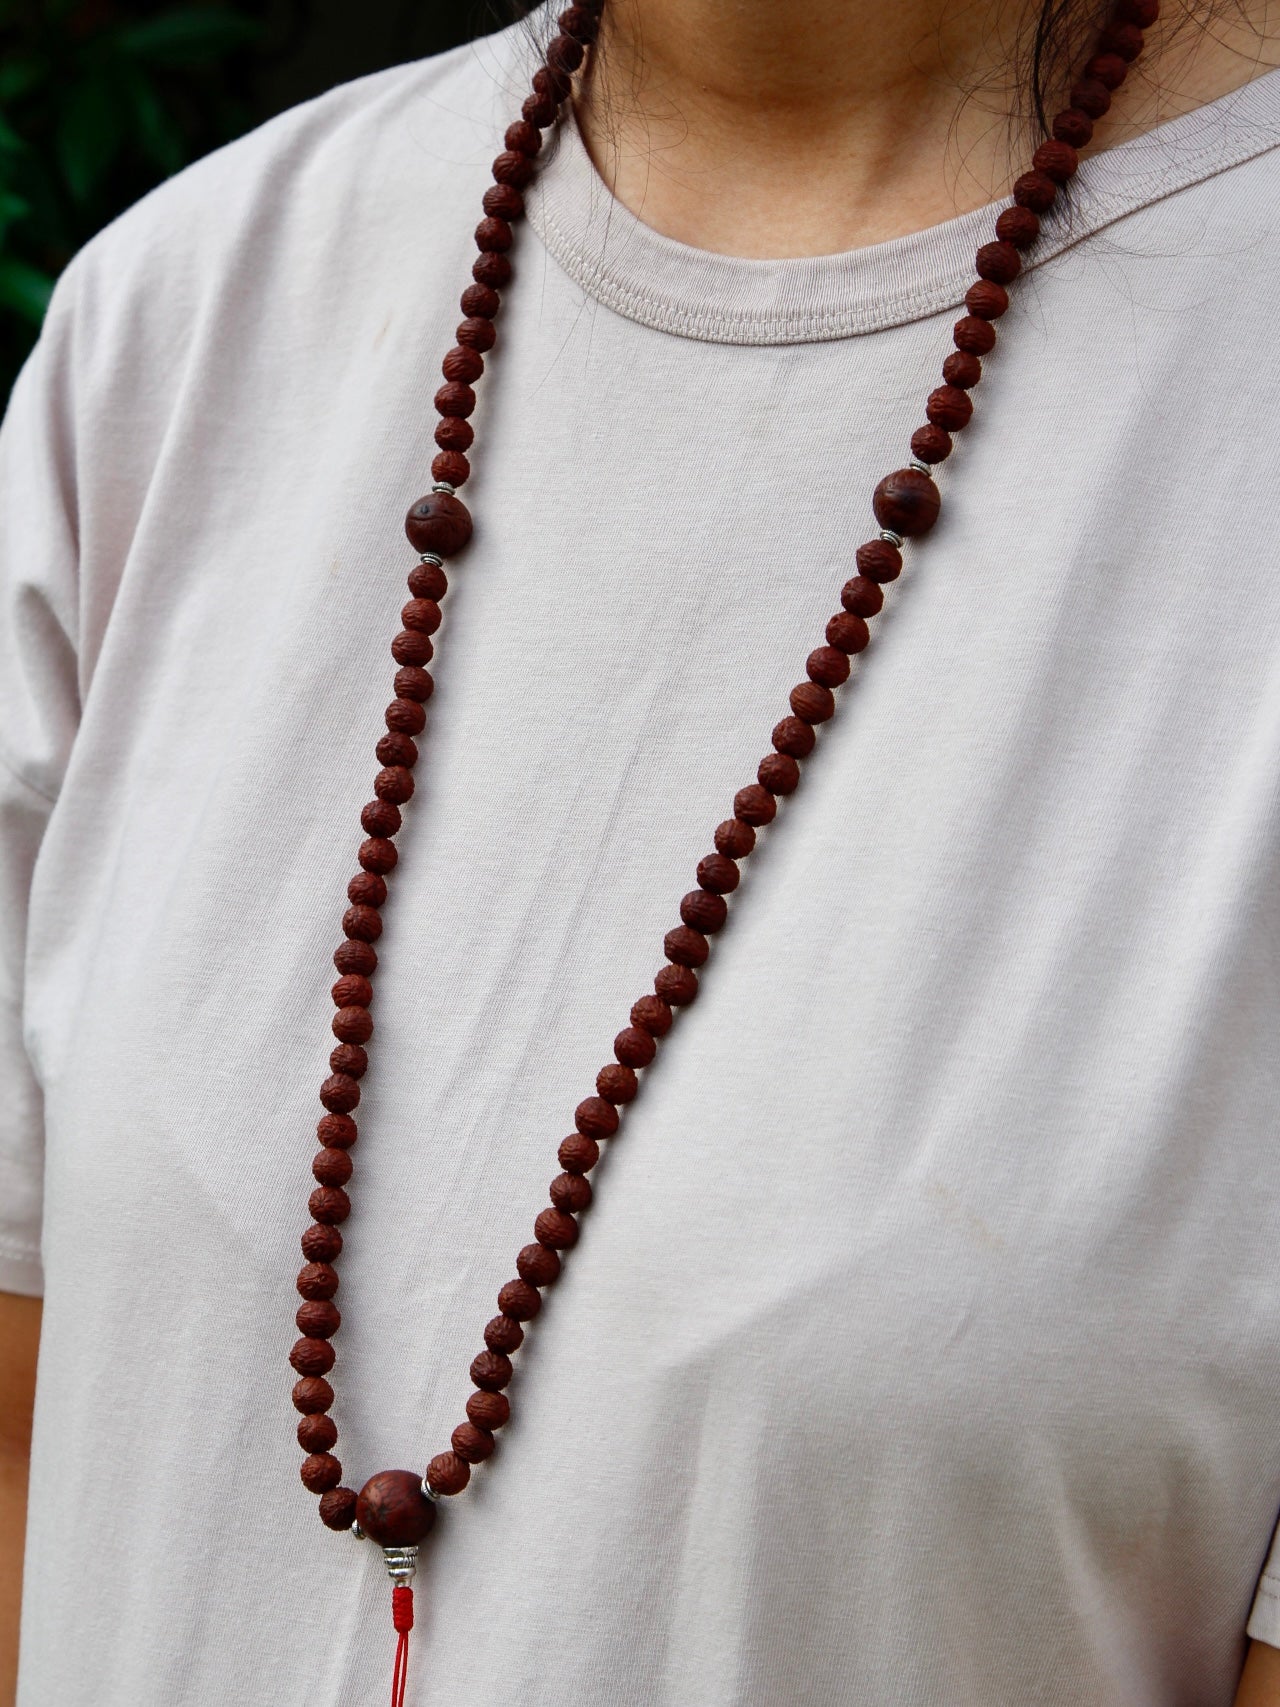 Rakhtu seed mala worn around neck to show length